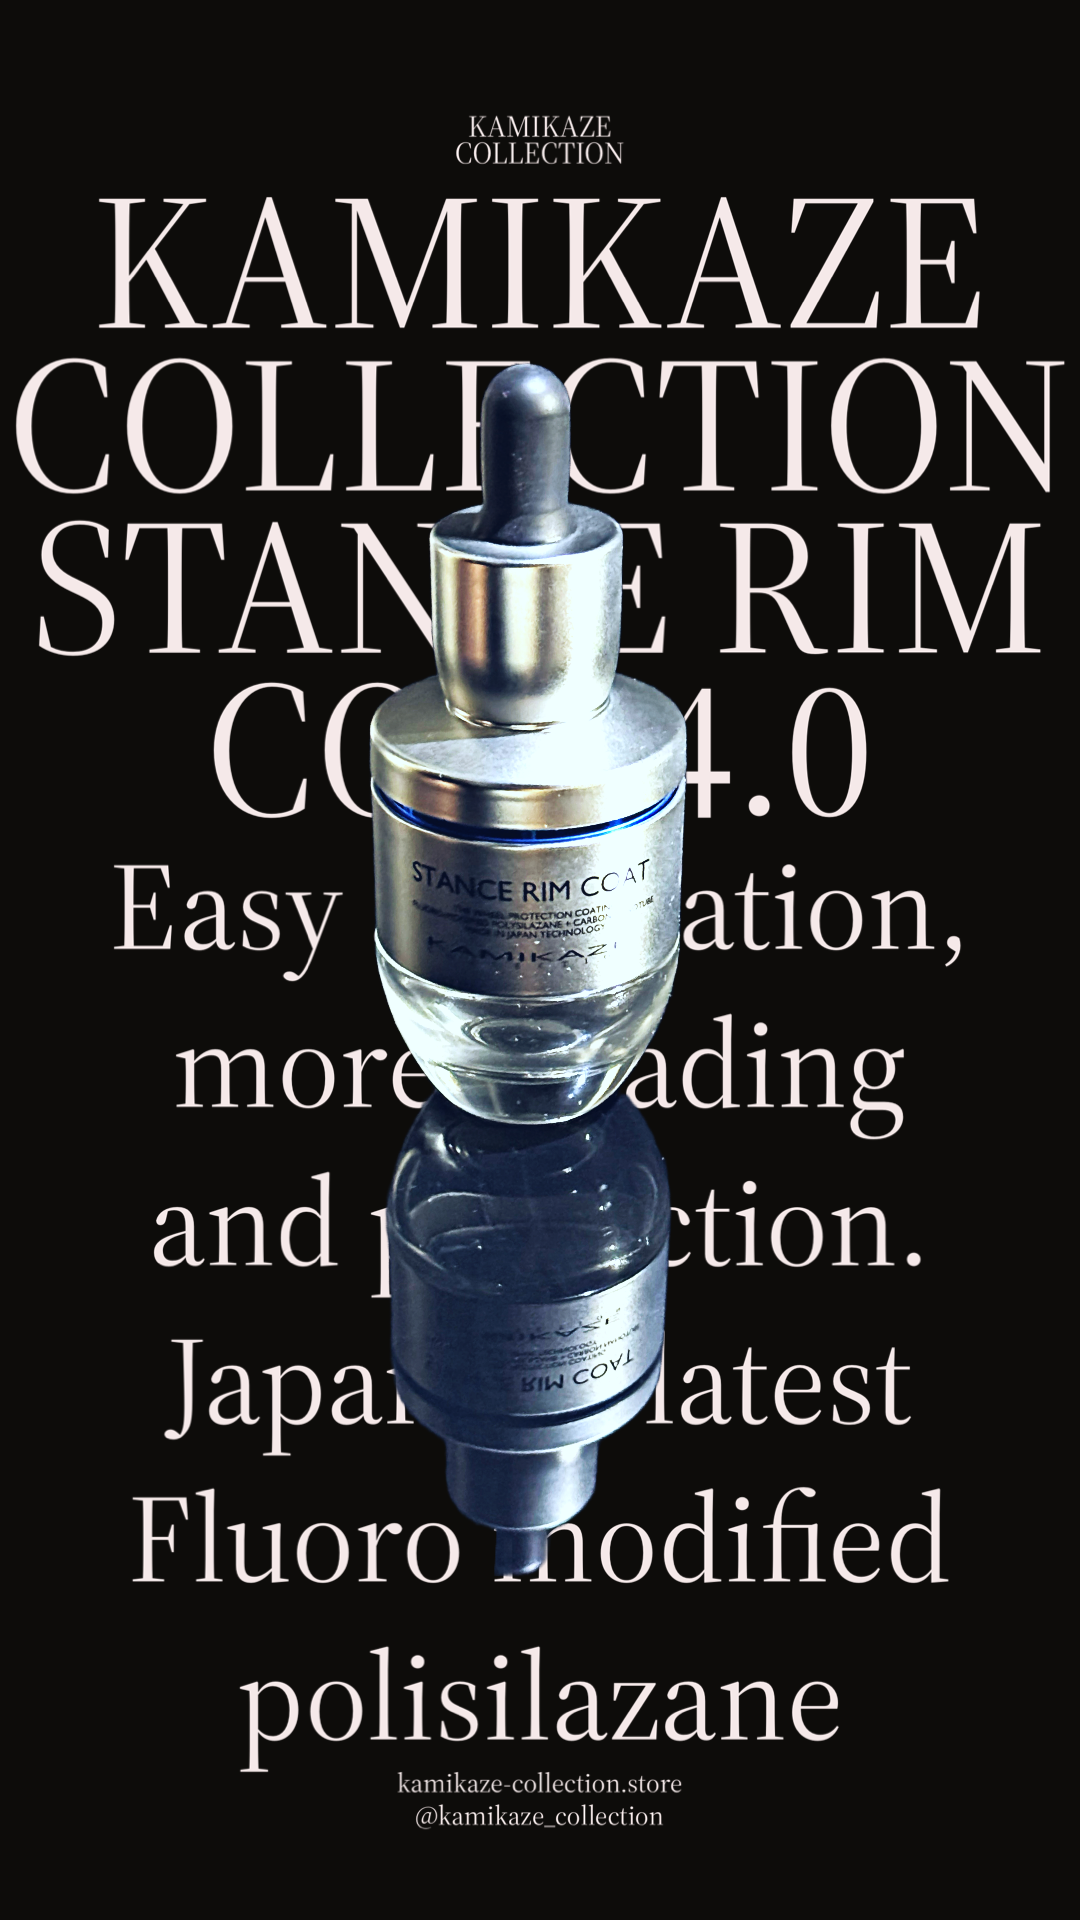 【NEW】STANCE RIM COAT 4.0